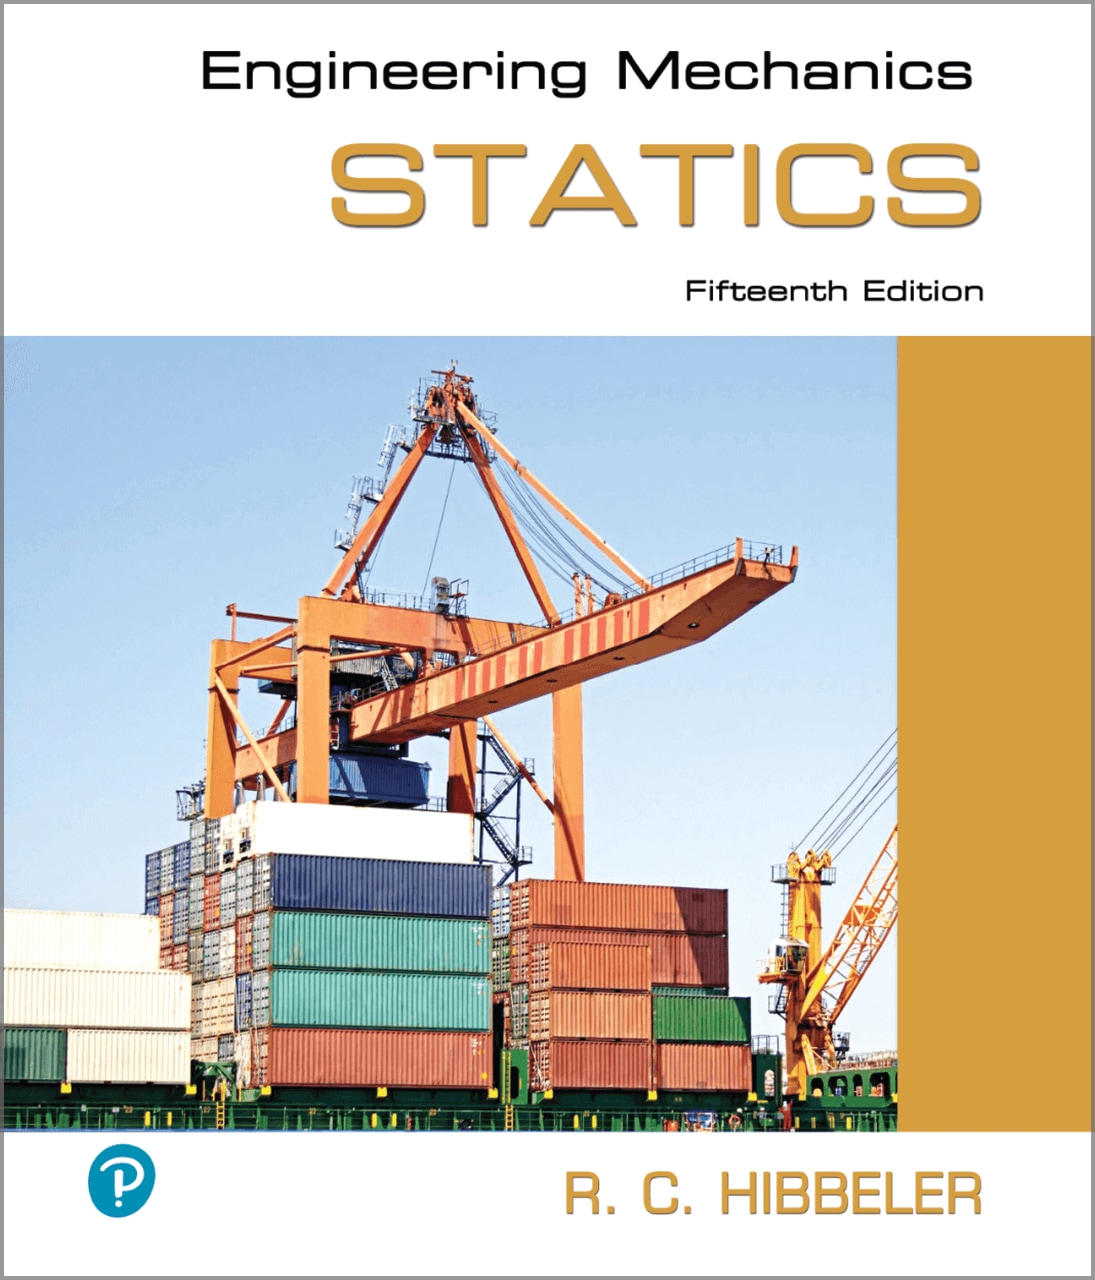 Engineering Mechanics: Statics, 15th Edition book cover